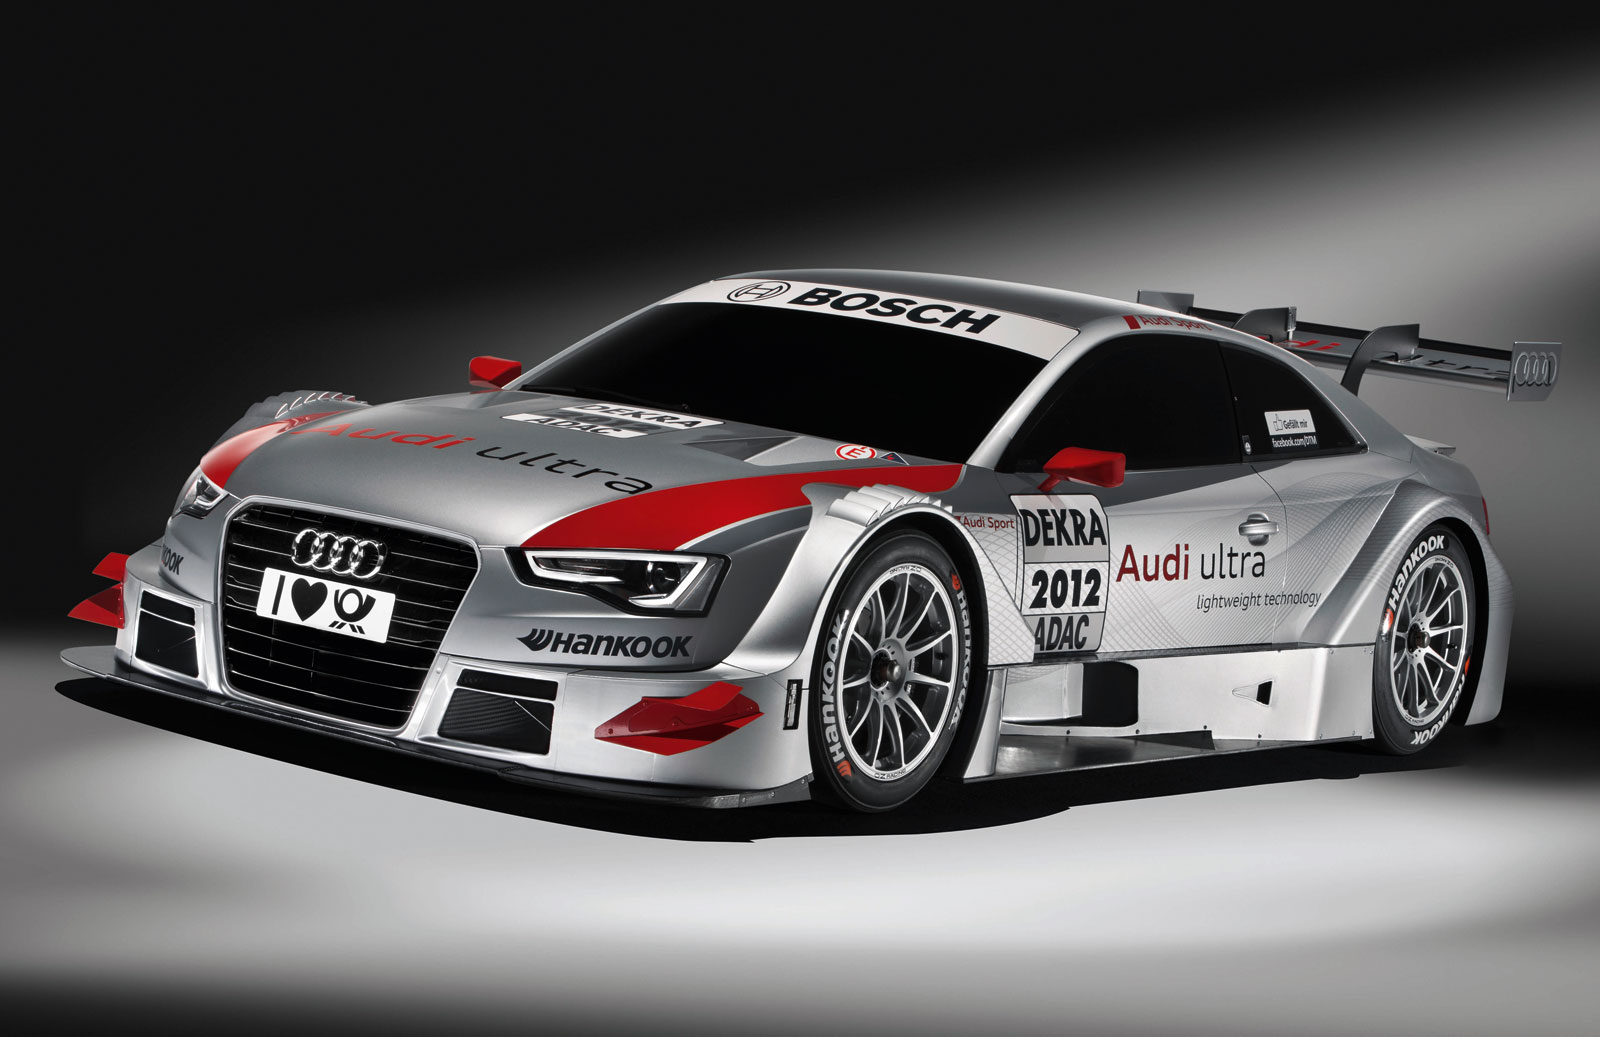 Audi A5 DTM Race Car hd Wallpapers 2012